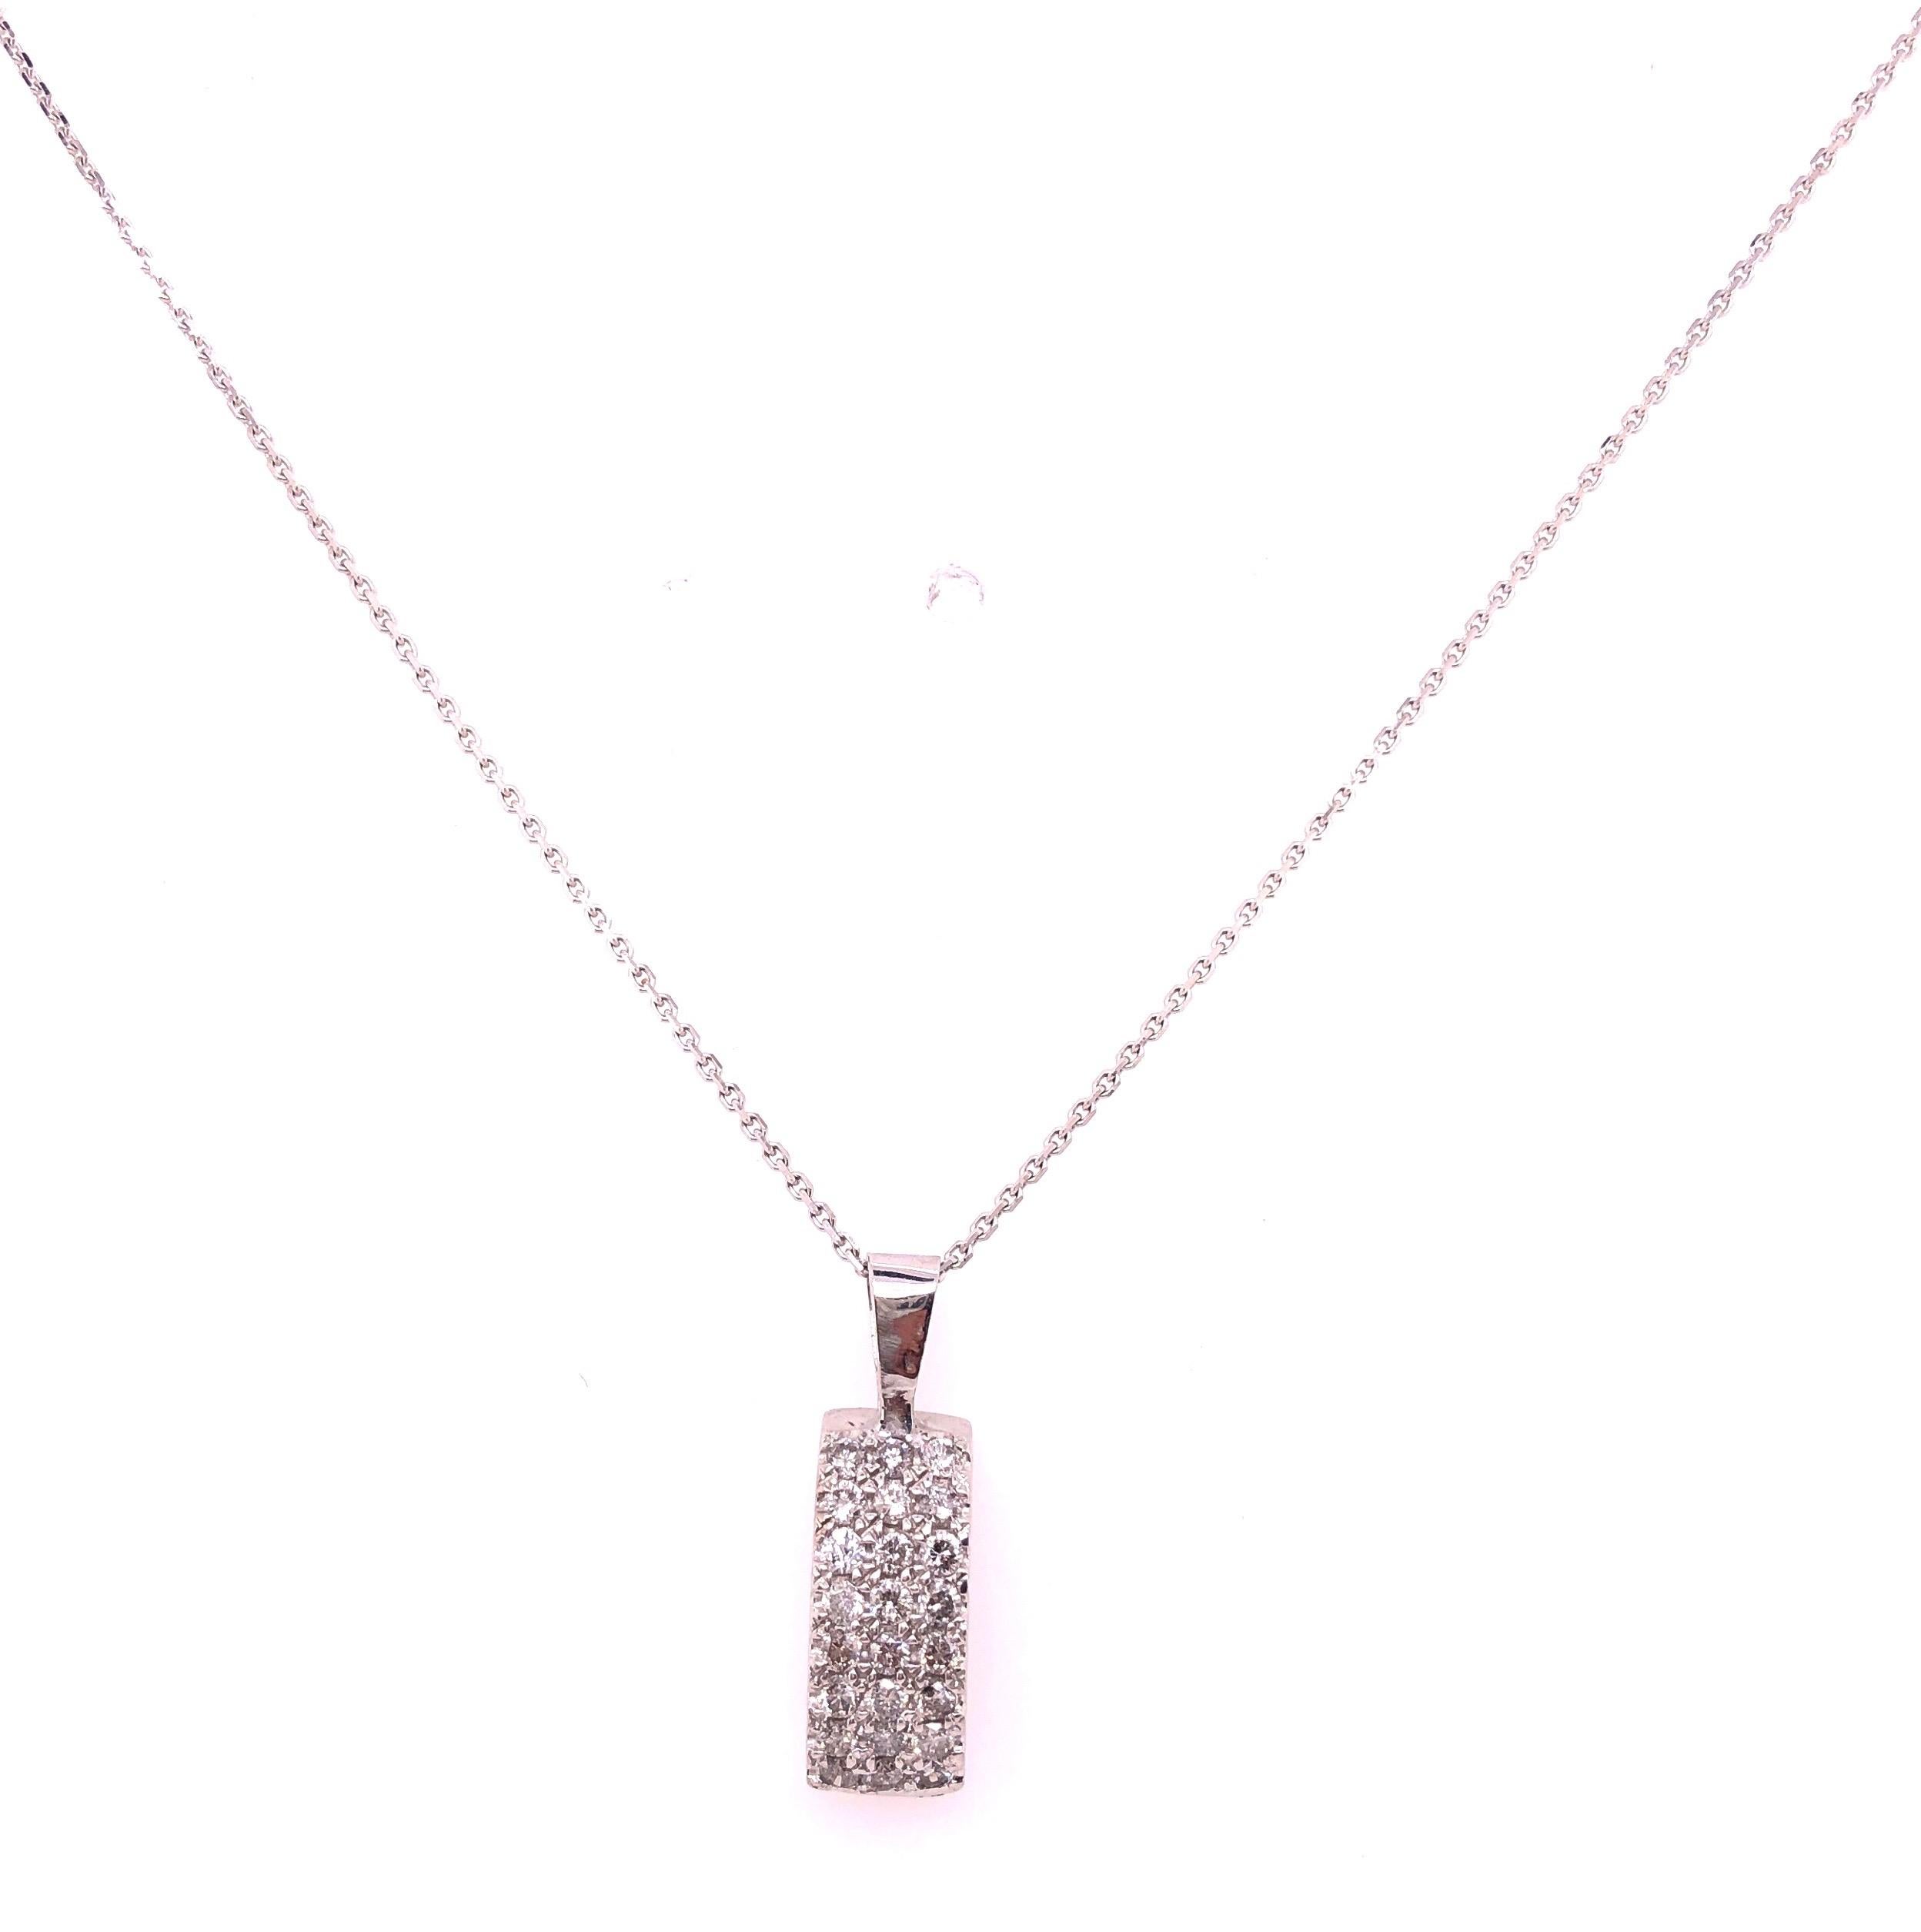 Women's or Men's 14 Karat White Gold Necklace with Pendant .80 Carat Diamond For Sale